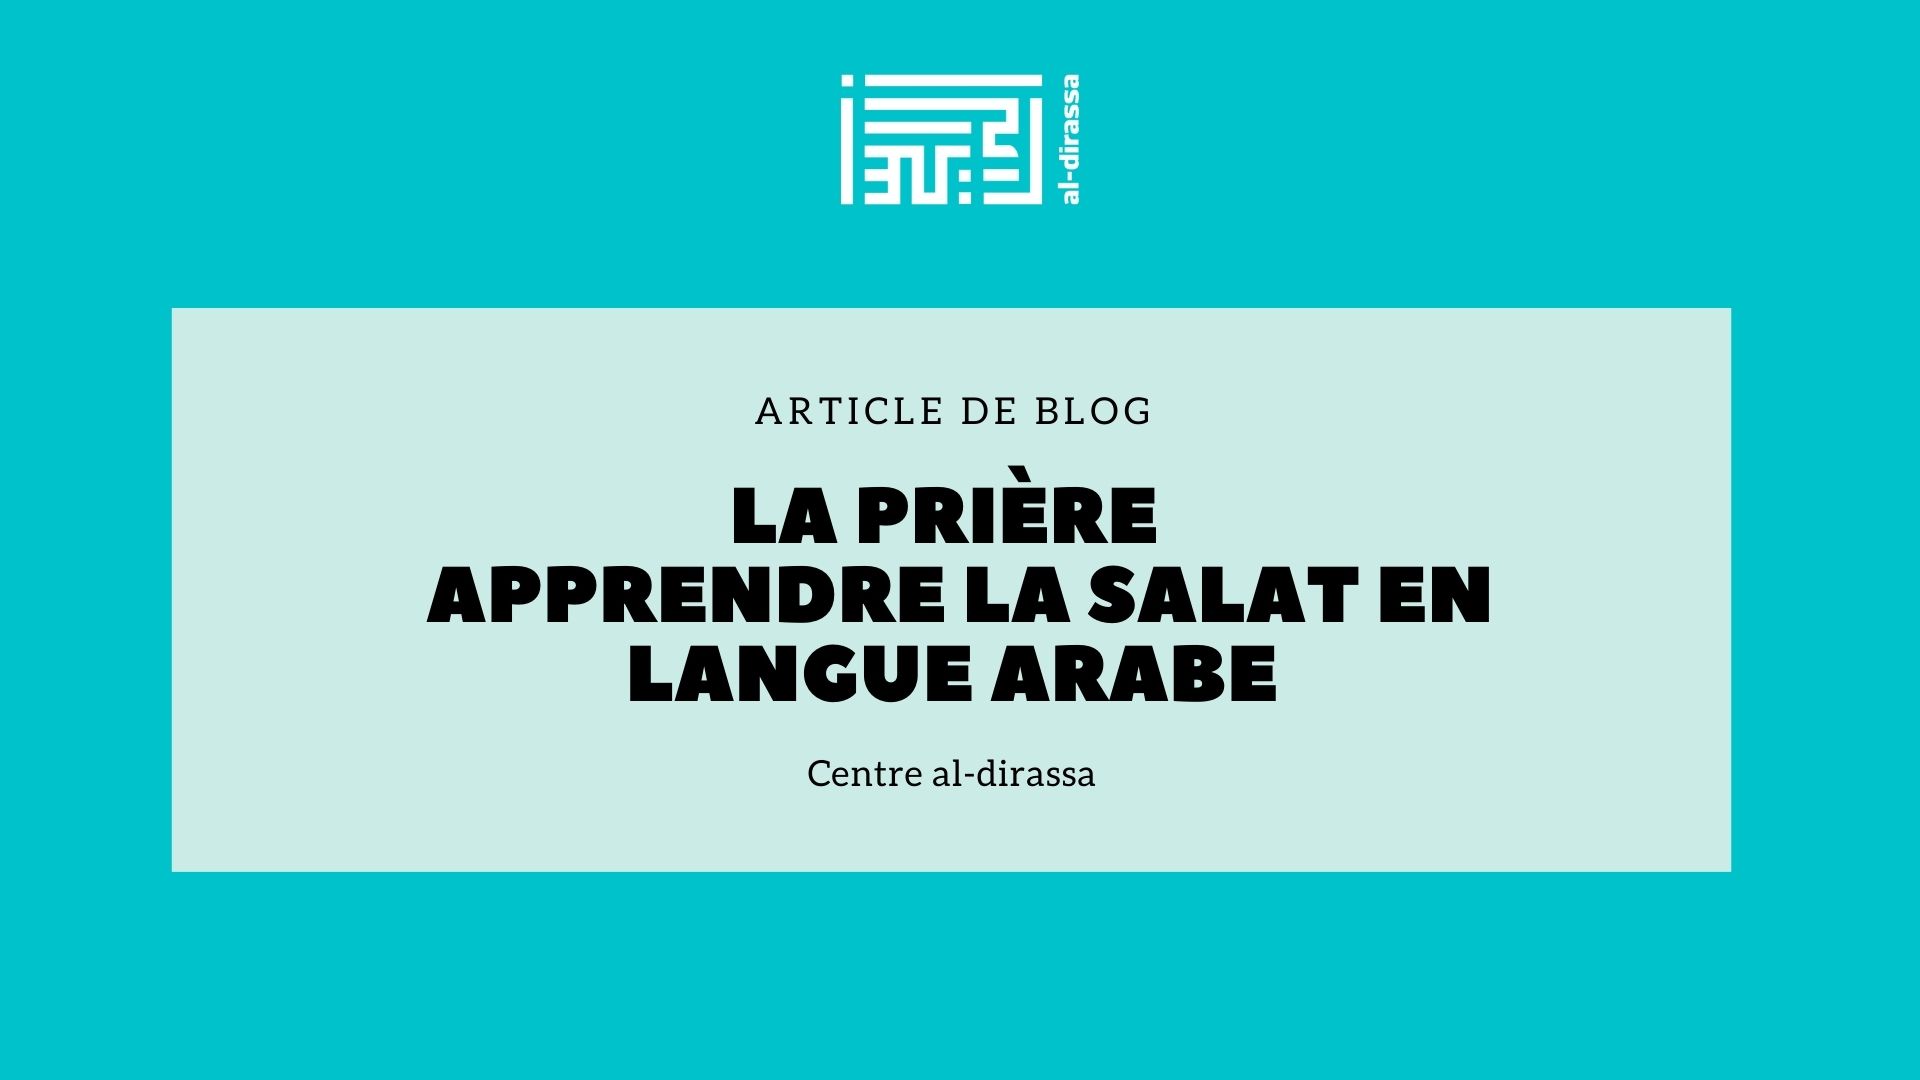 La prière - apprendre la Salat en langue arabe